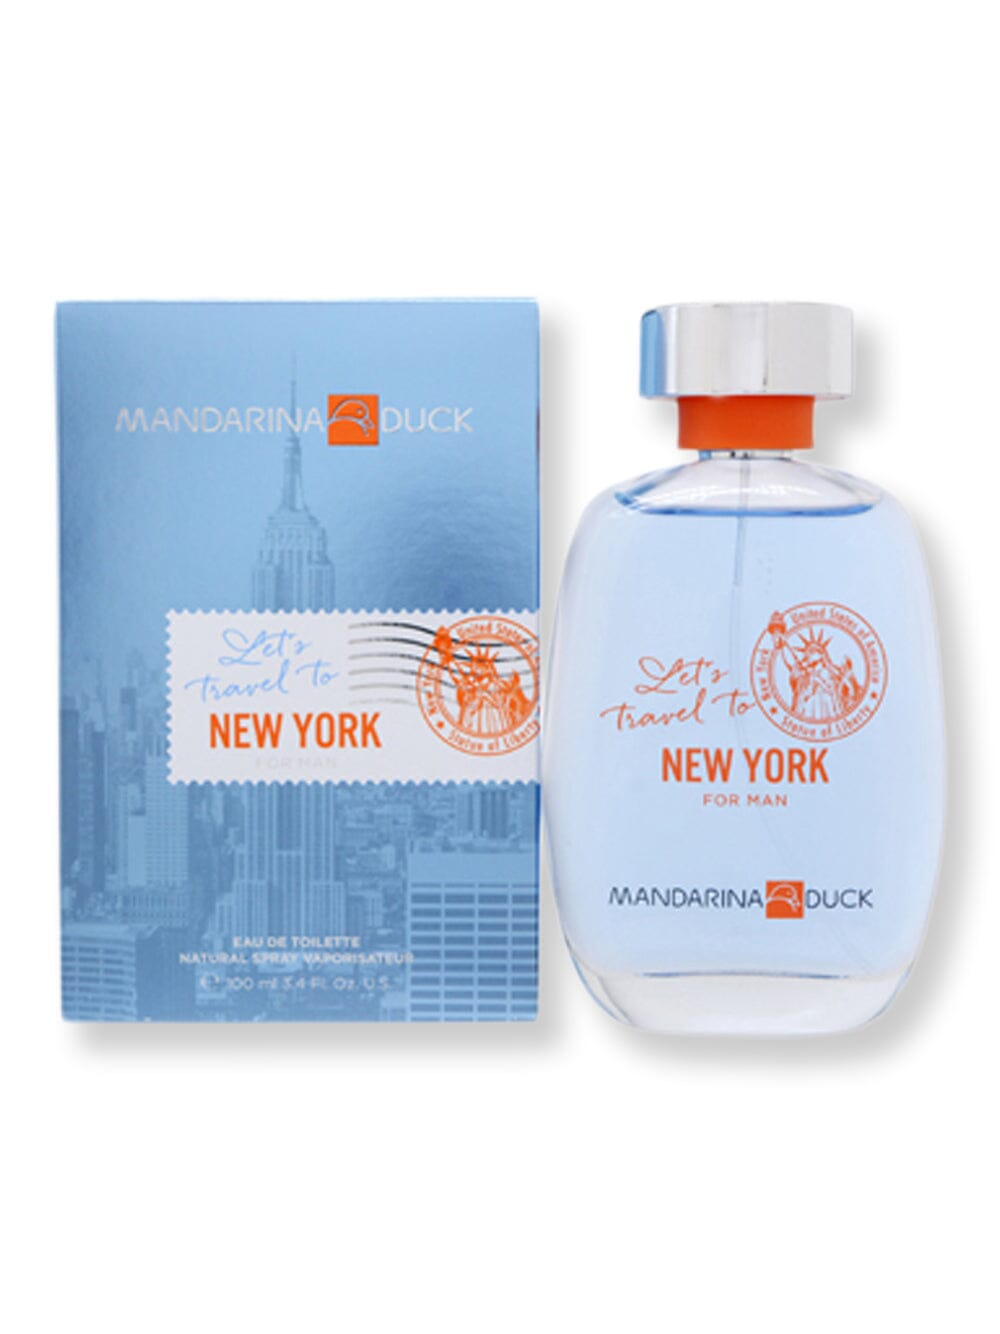 Mandarina Duck Mandarina Duck Let's Travel To New York EDT Spray 3.4 oz100 ml Perfume 